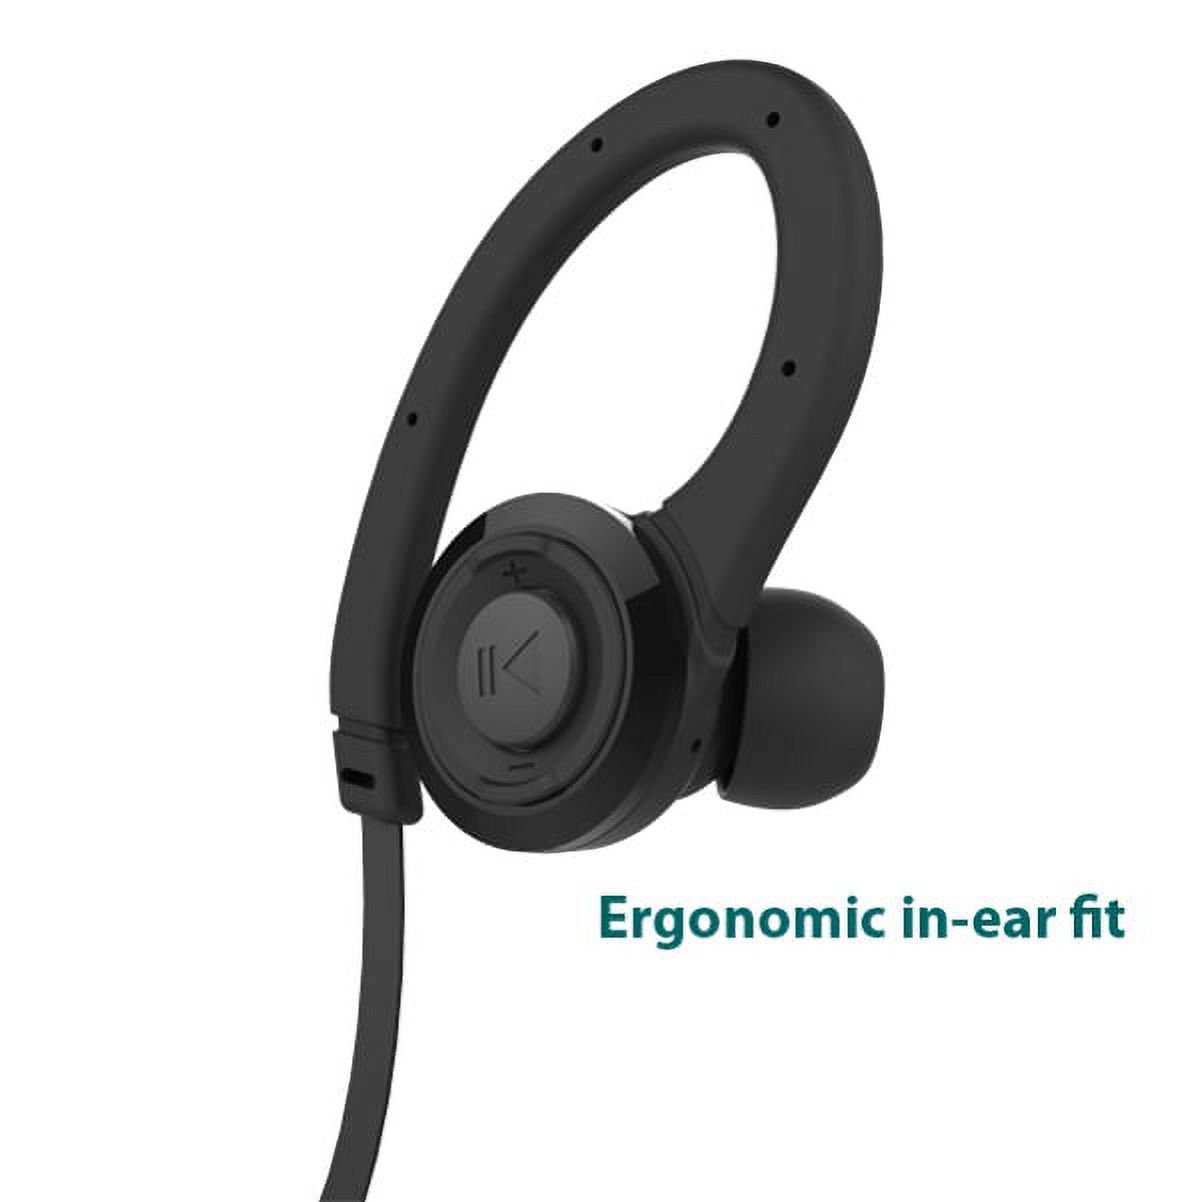 Sweatproof Hi-Fi Sports Headset Wireless Earphones Mic Premium Sound Earbuds Handsfree [Black] Compatible With Alcatel Onyx - LG V50 ThinQ 5G, G8 ThinQ - Motorola Moto G7 Power Play - image 2 of 6